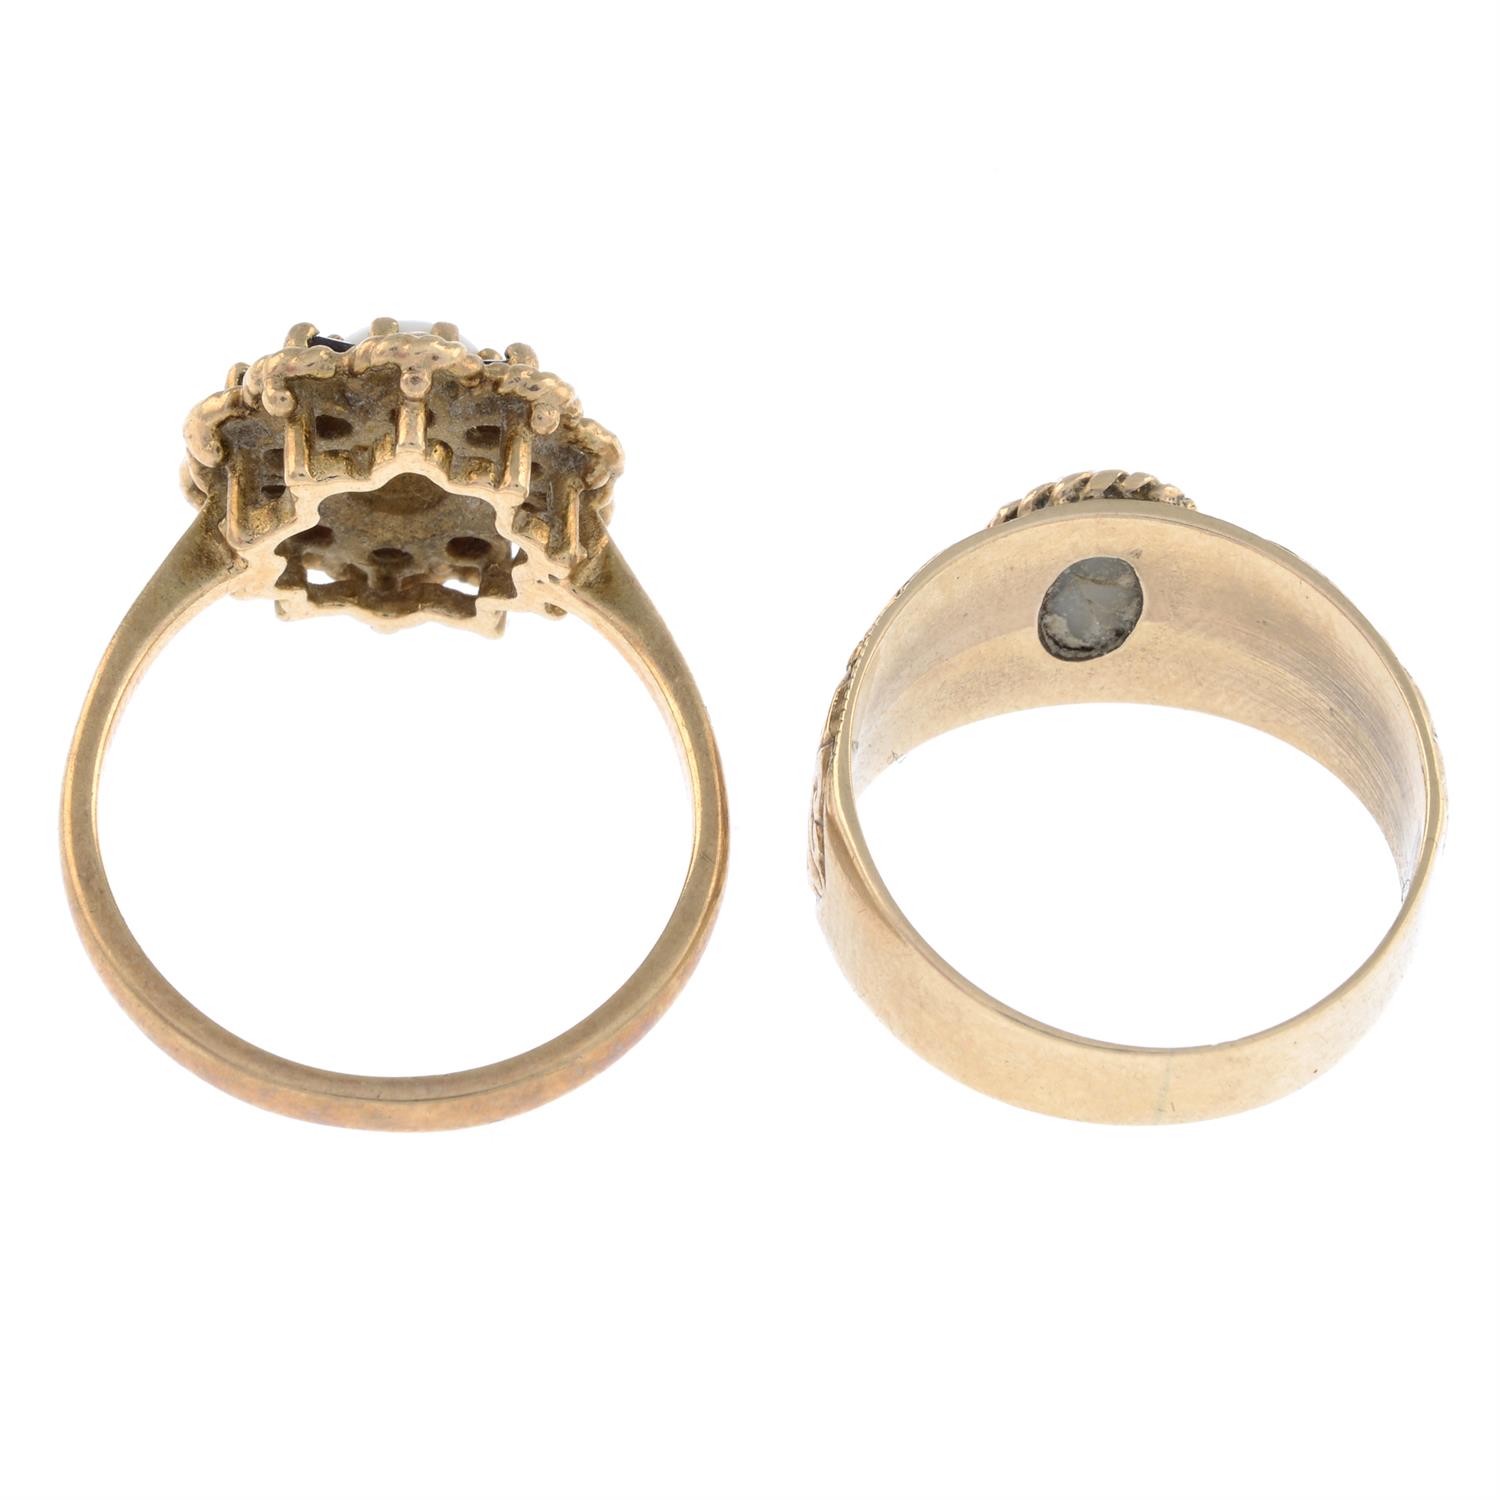 Two 9ct gold gem-set dress rings - Image 2 of 2